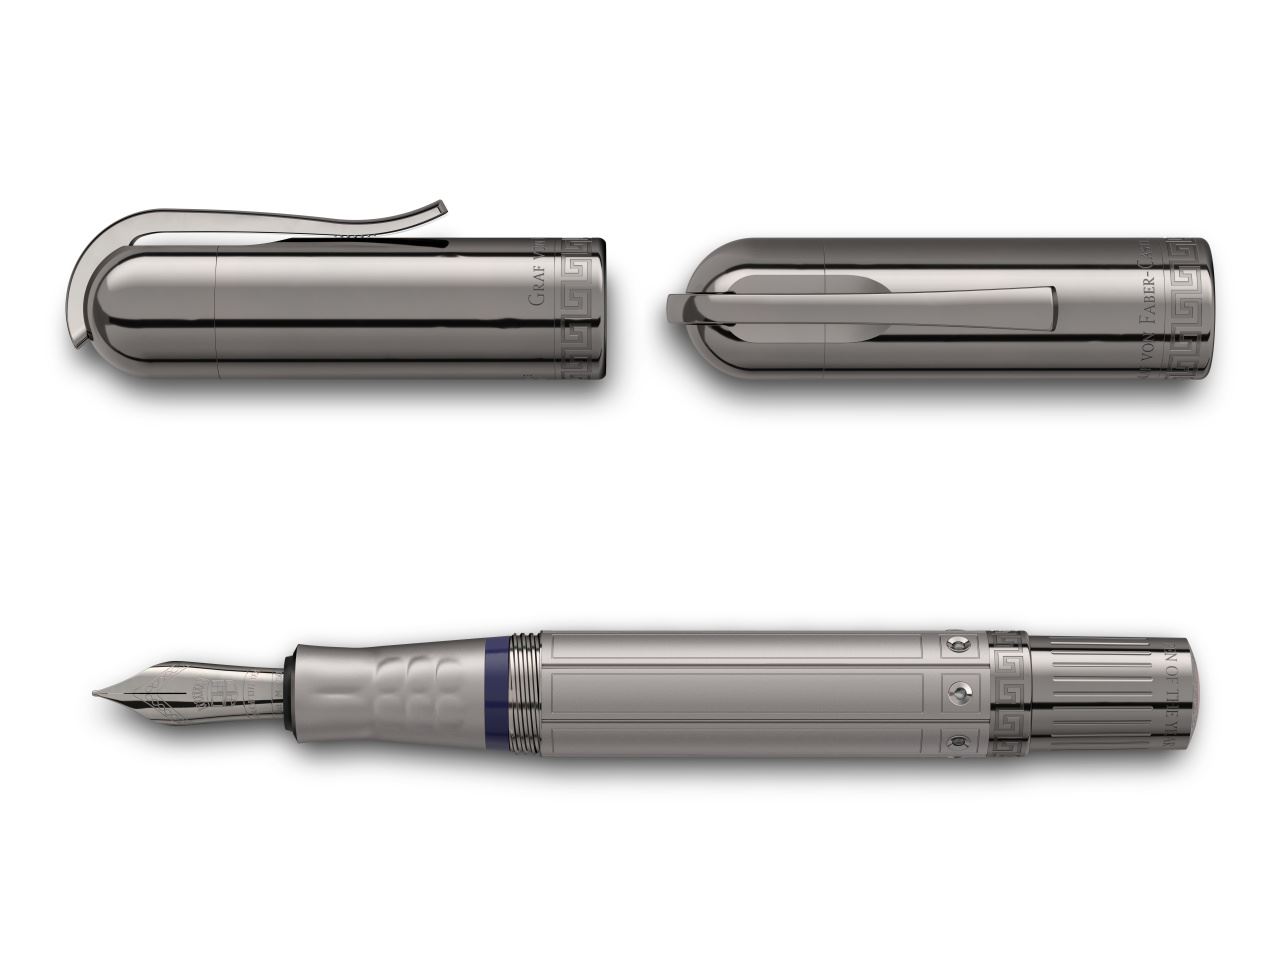 Graf-von-Faber-Castell - Fountain pen Pen of the Year 2020 Ruthenium, Fine